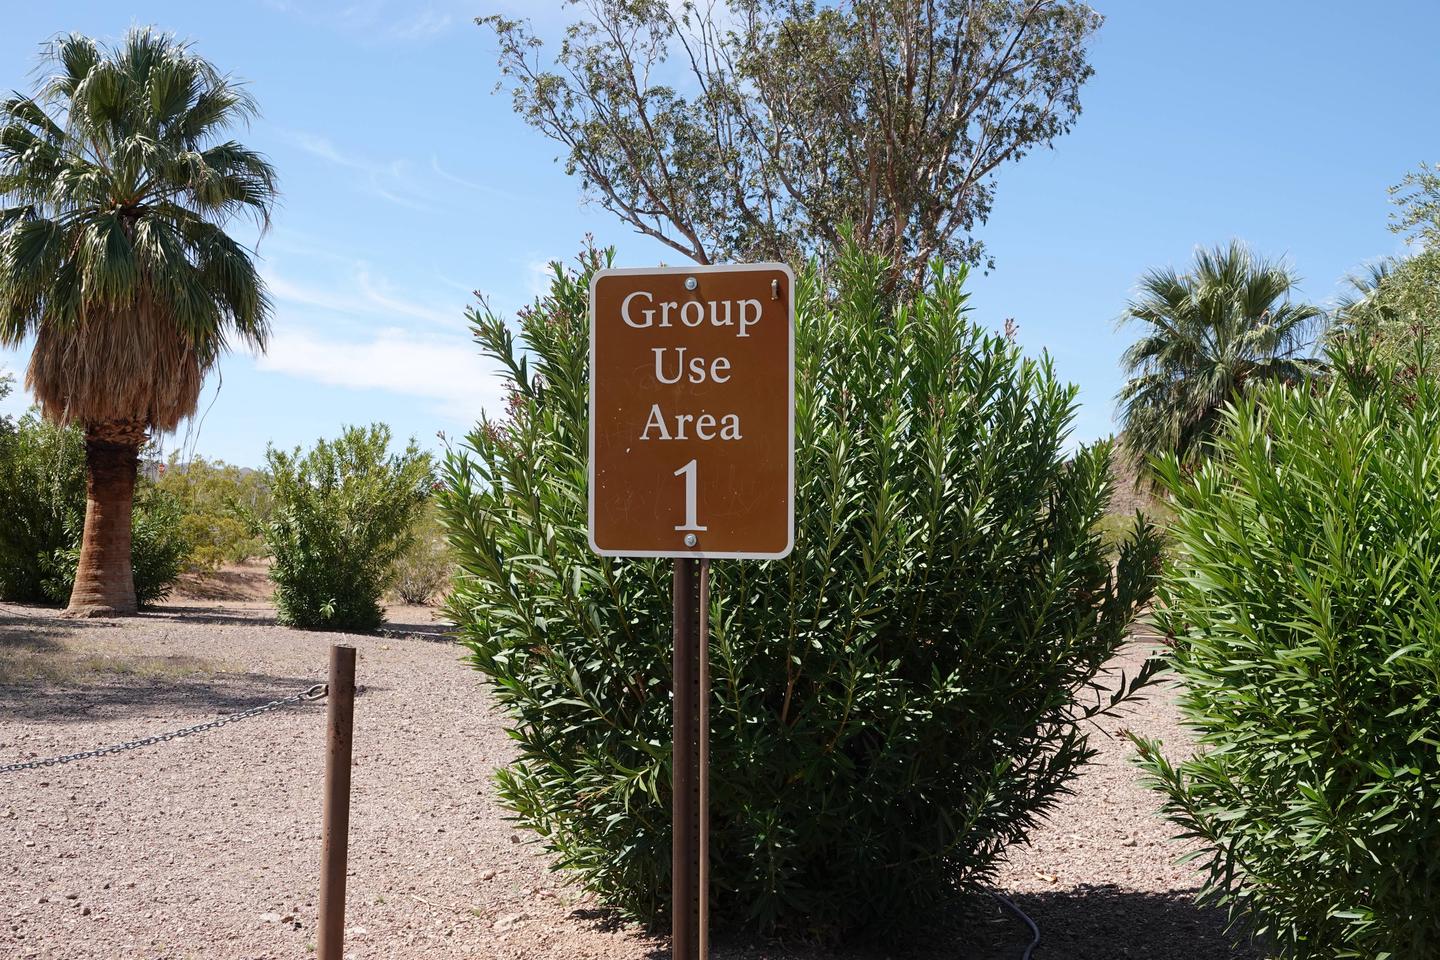 Campsite sign 1 located in a desert settingBoulder Beach Group Site 1